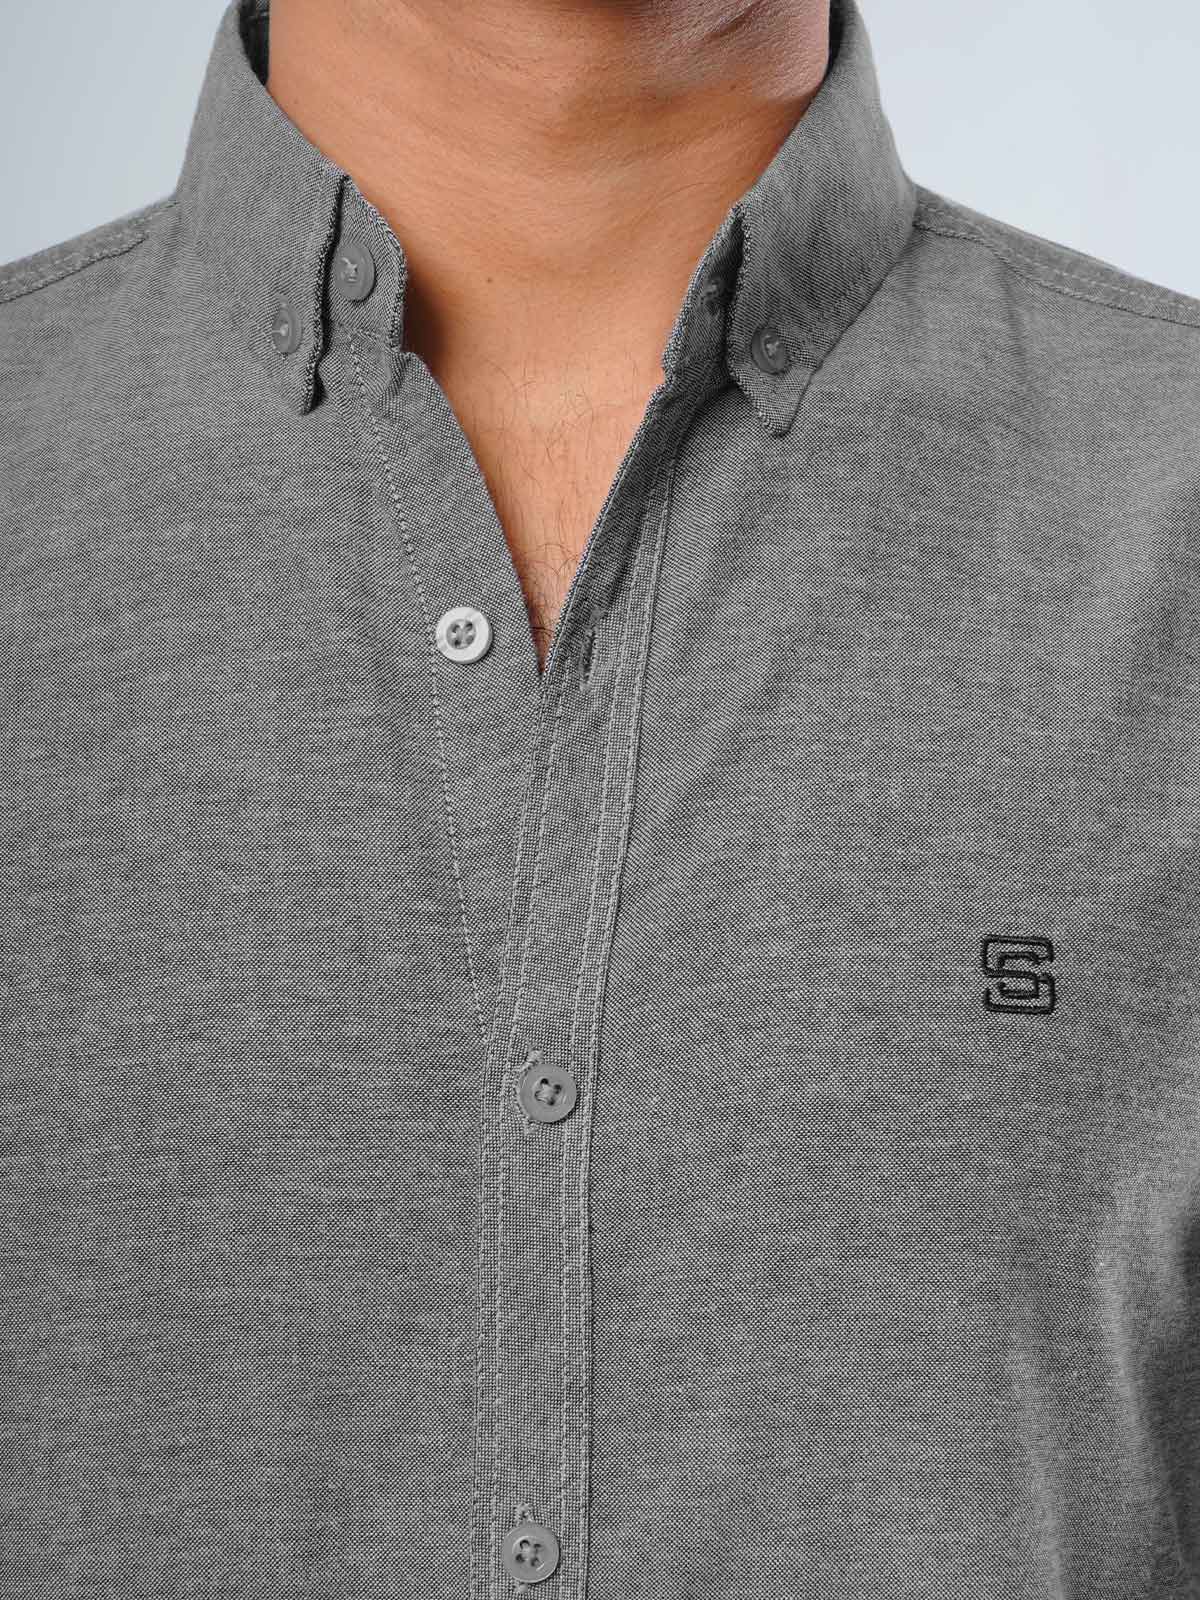 Grey Self Button Down Casual Shirt (CSB-124)